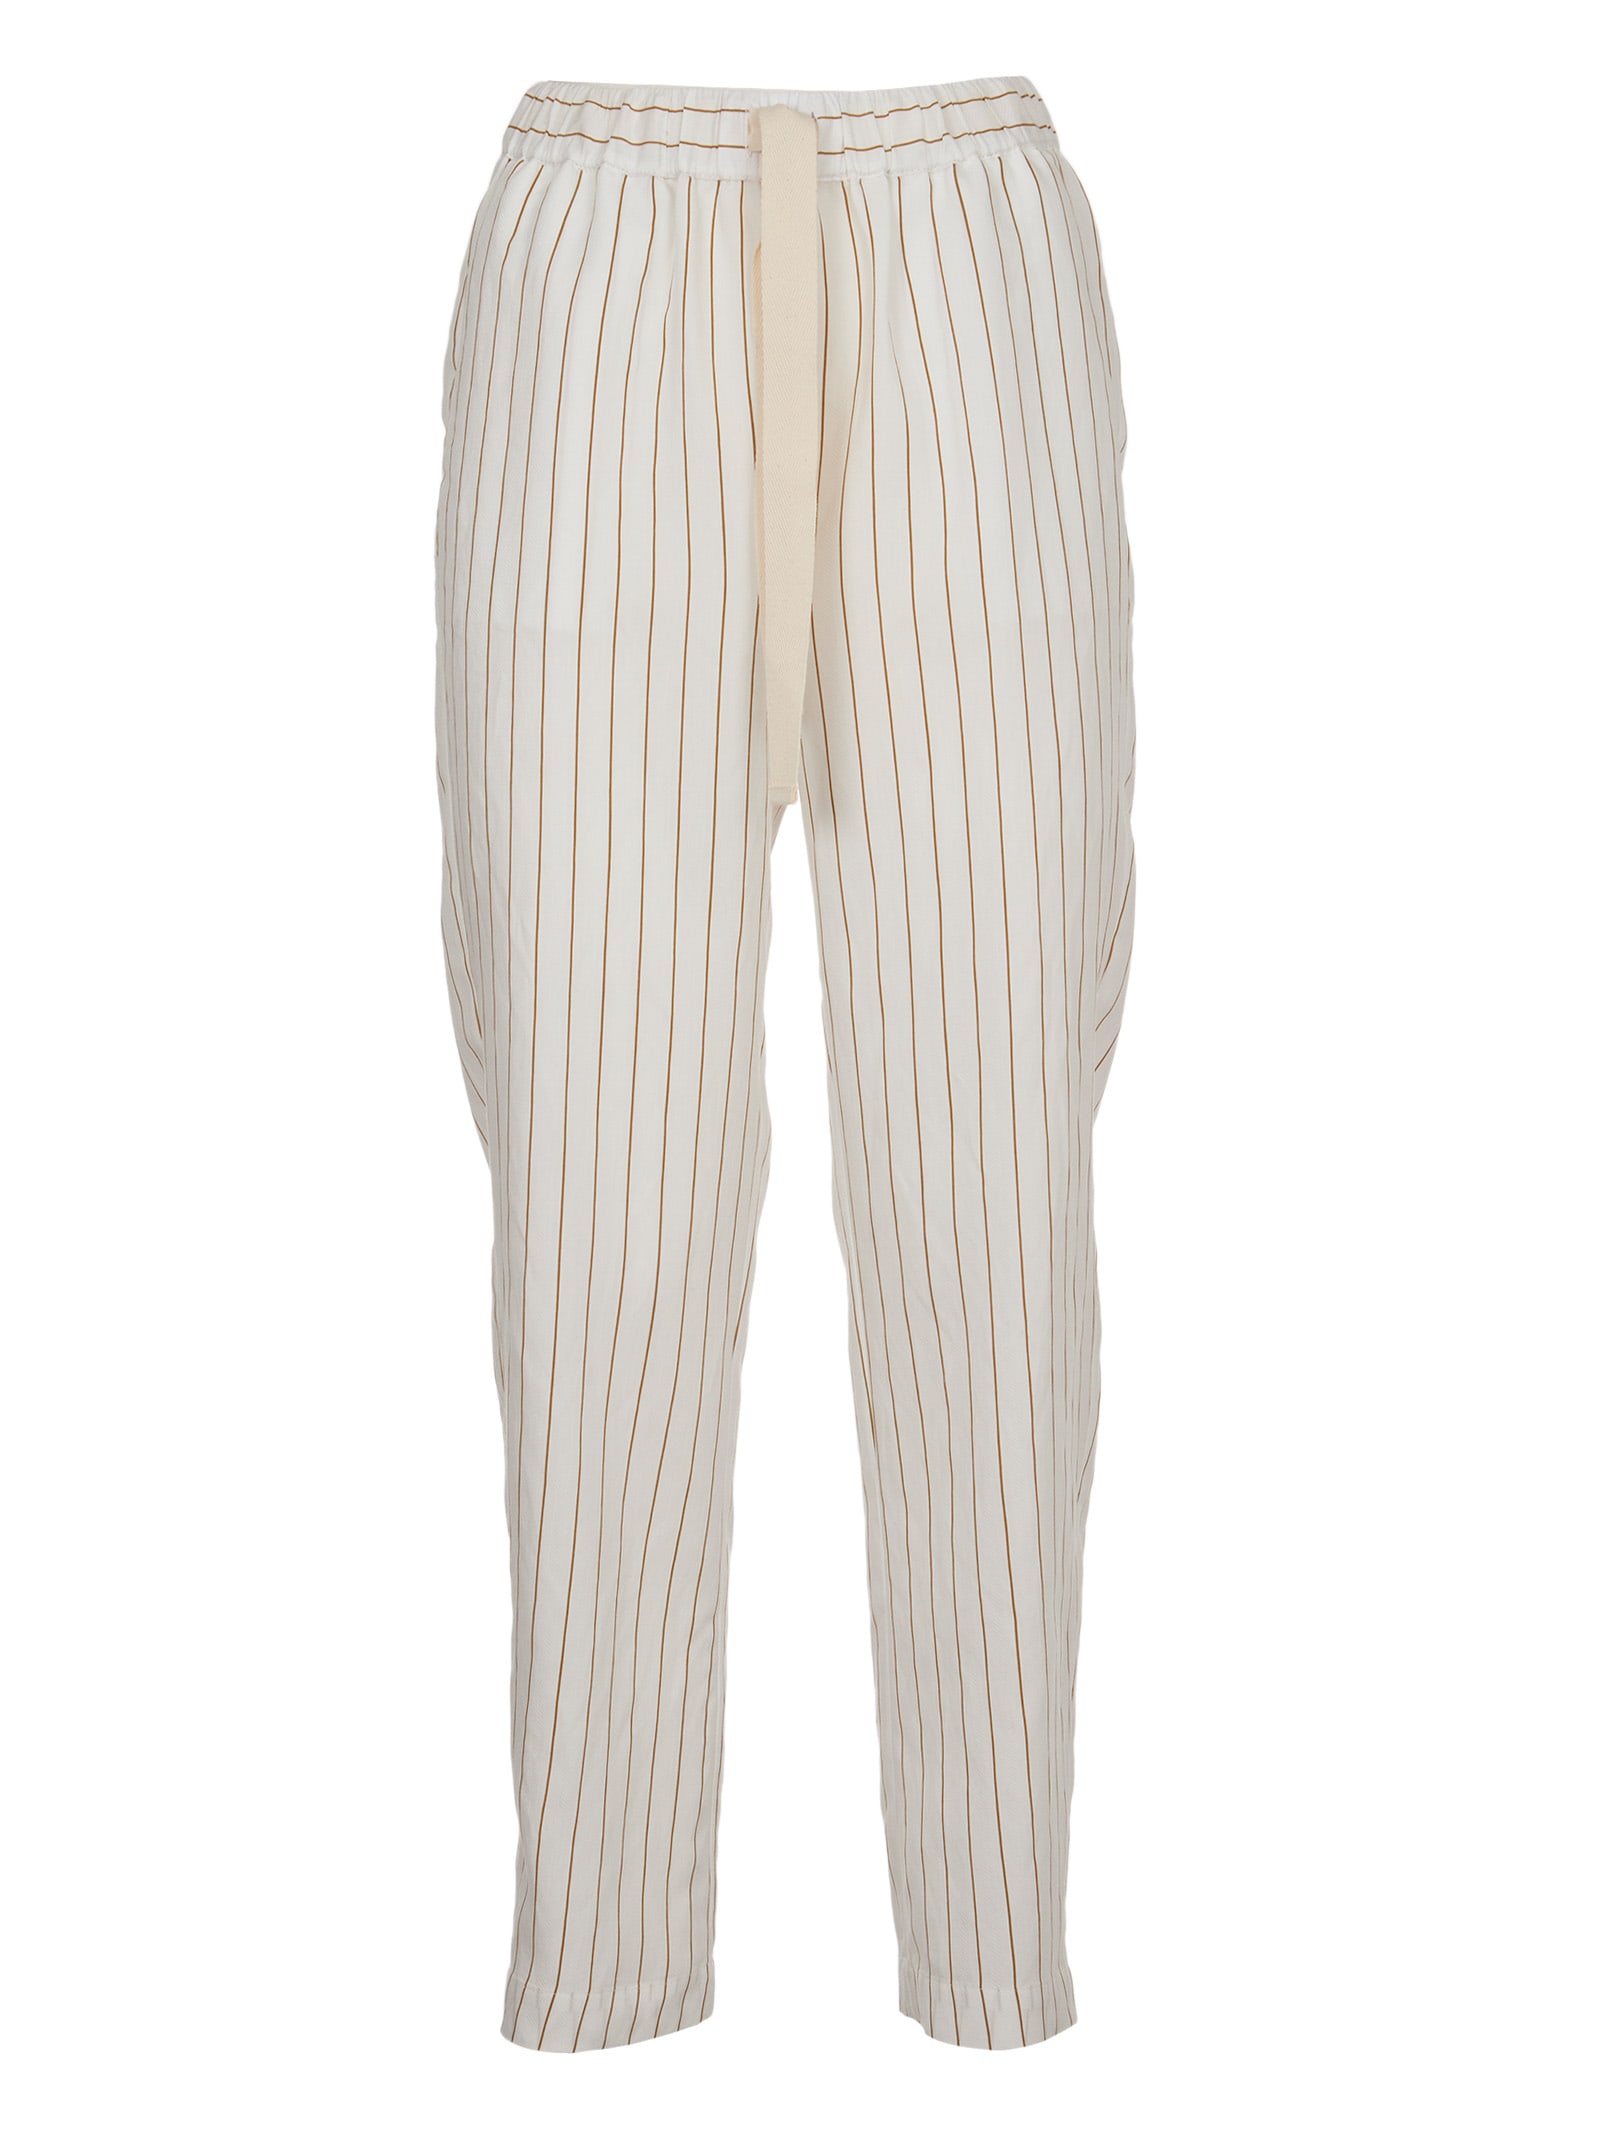 SEMICOUTURE White Striped Trousers